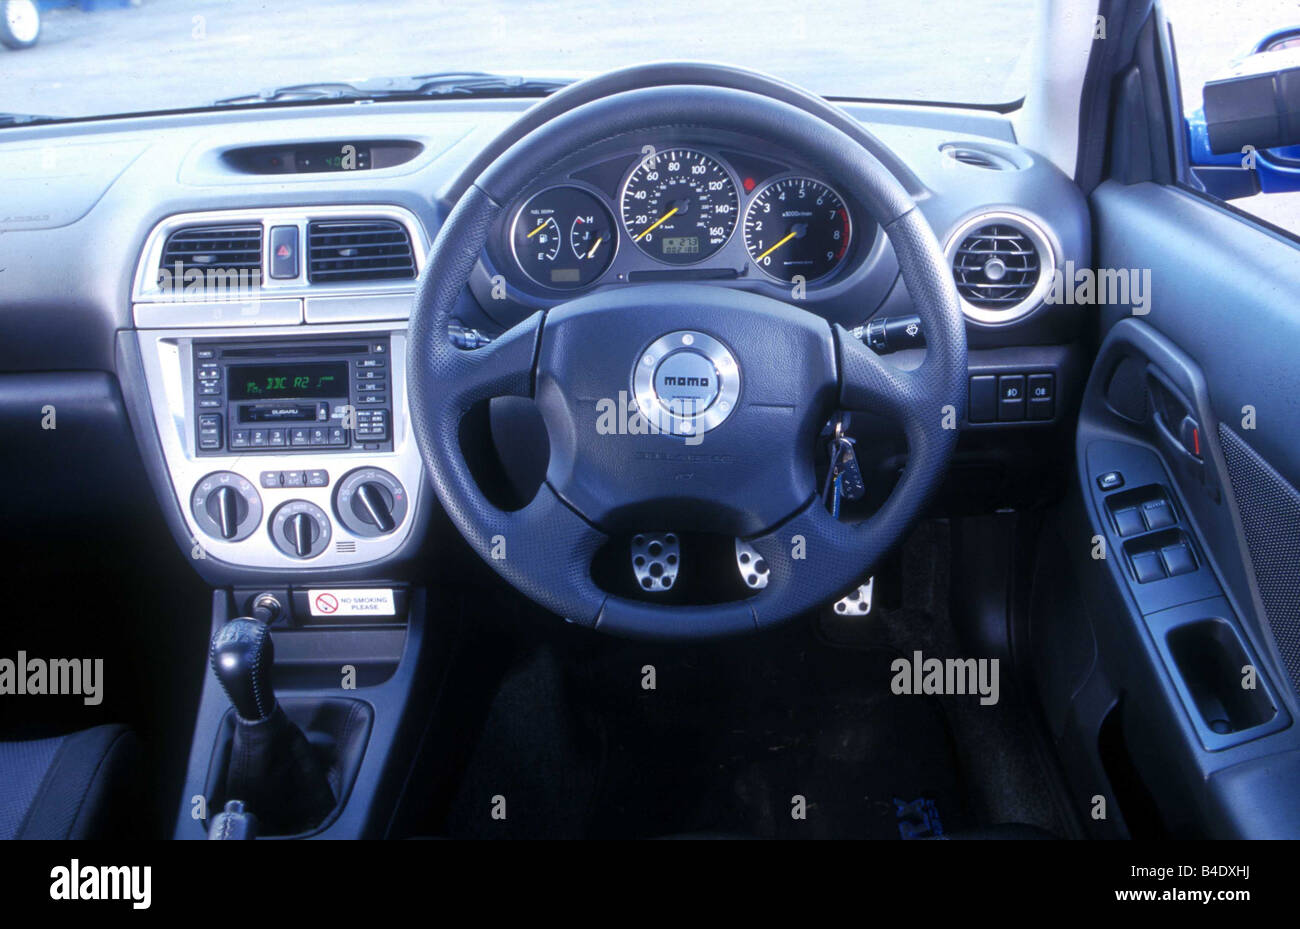 Car, Subaru Impreza, Lower middle-sized class, Limousine, model year 2001-, silver, interior view, Interior view, Cockpit, techn Stock Photo